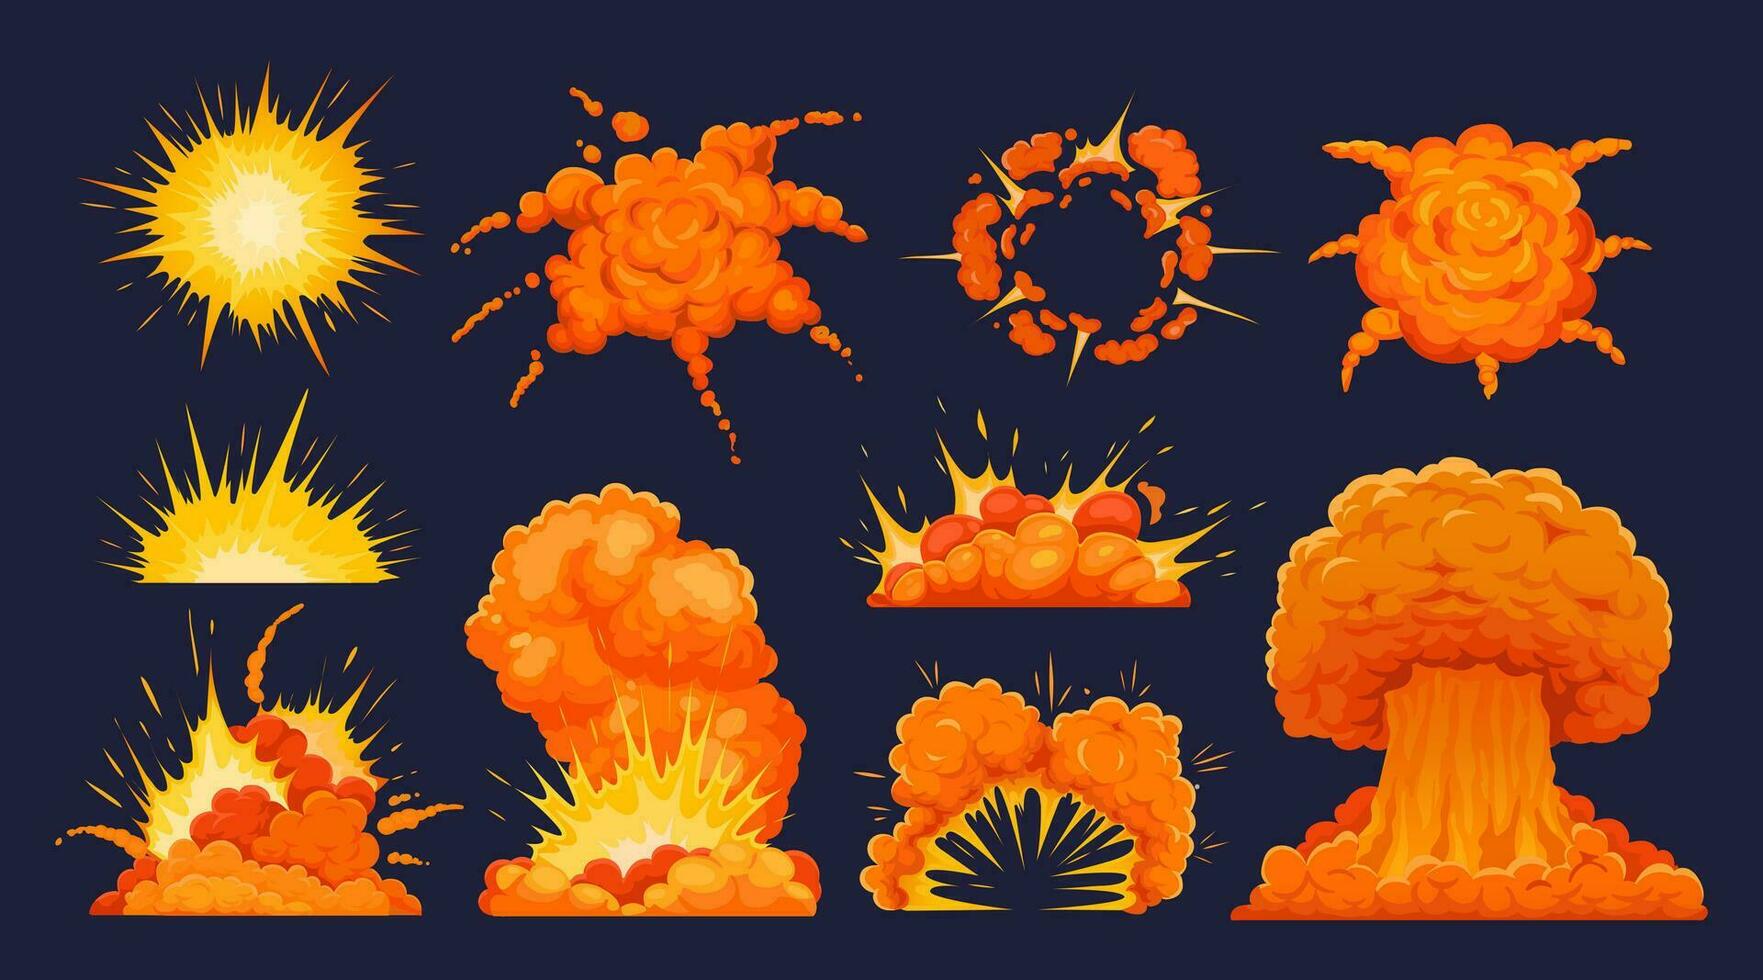 bom explosie. tekenfilm dynamiet explosies effect, brand en explosief wolken. verwoesting bommen vlam. grappig Gevaar boom wolken voor digitaal spel. vector reeks